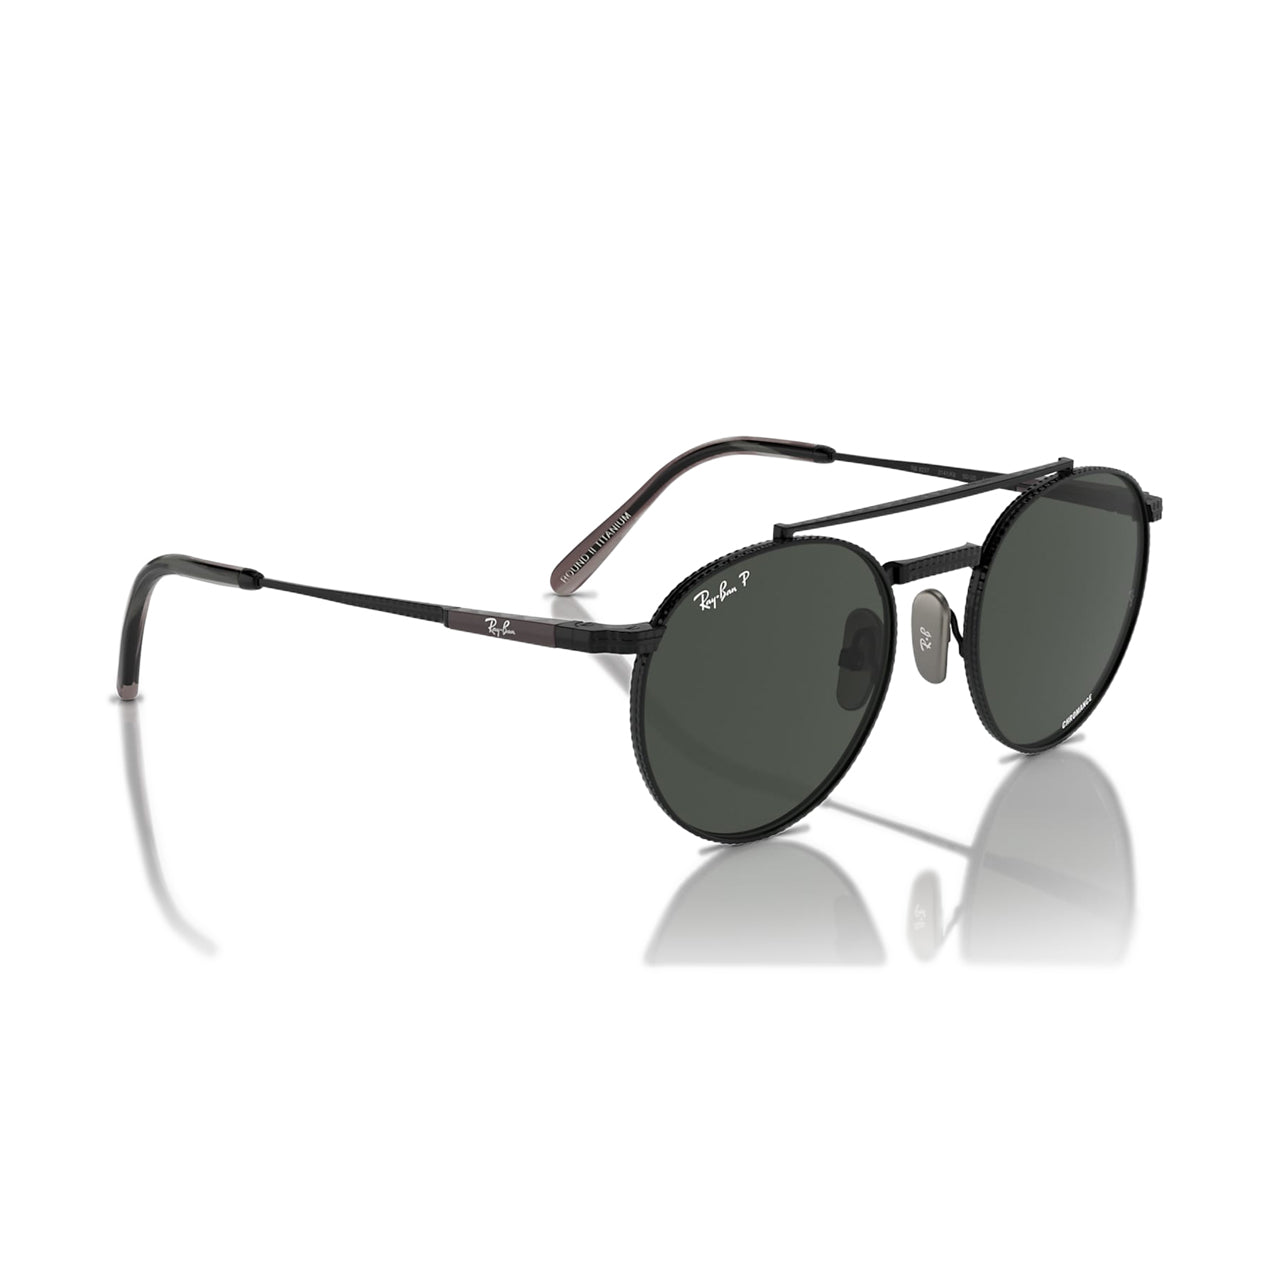 Ray-Ban Round II Titanium Sunglasses